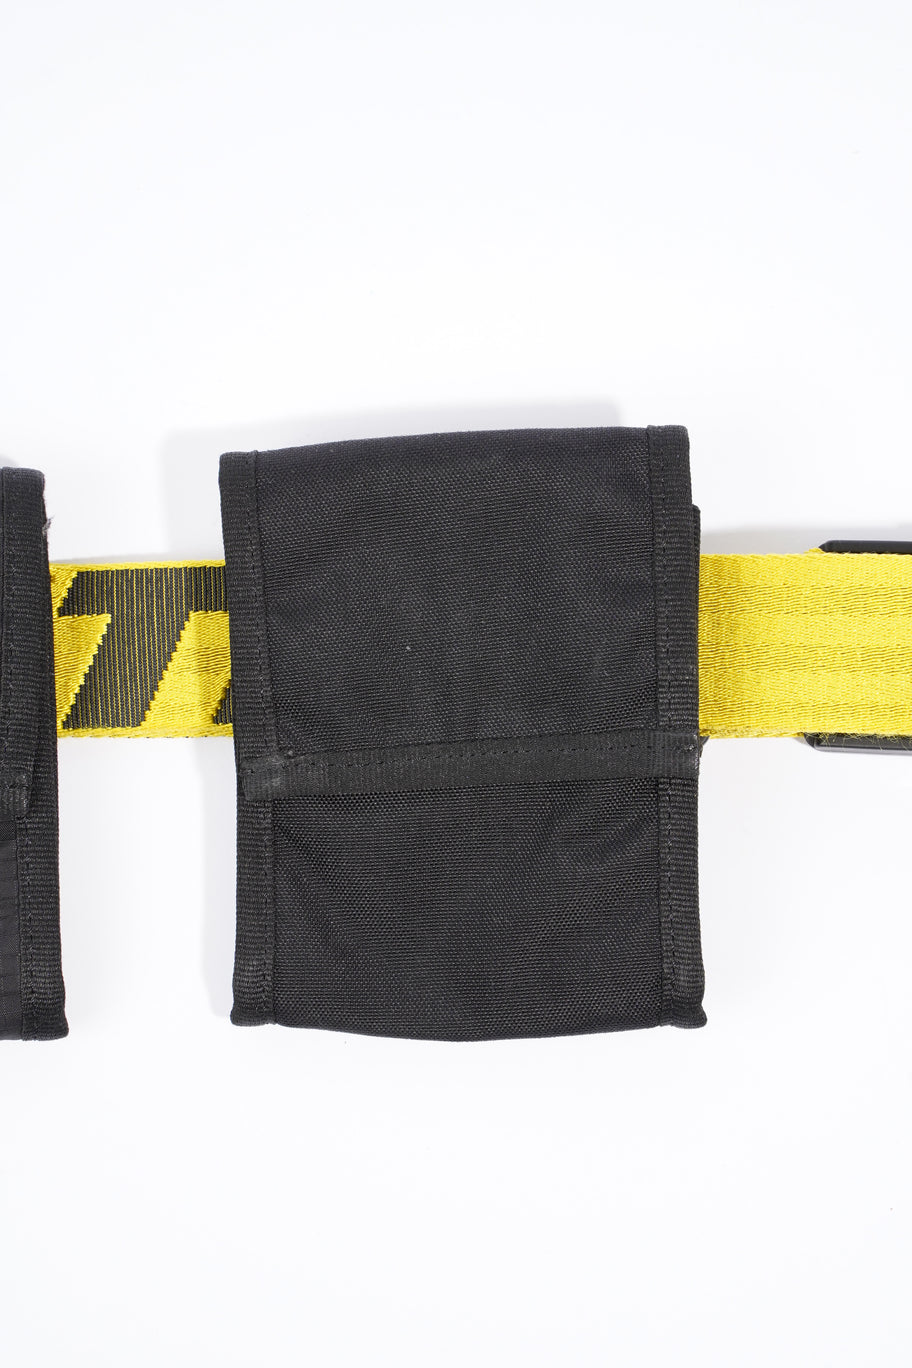 Two Pocket Belt Yellow / Black Fabric Image 4